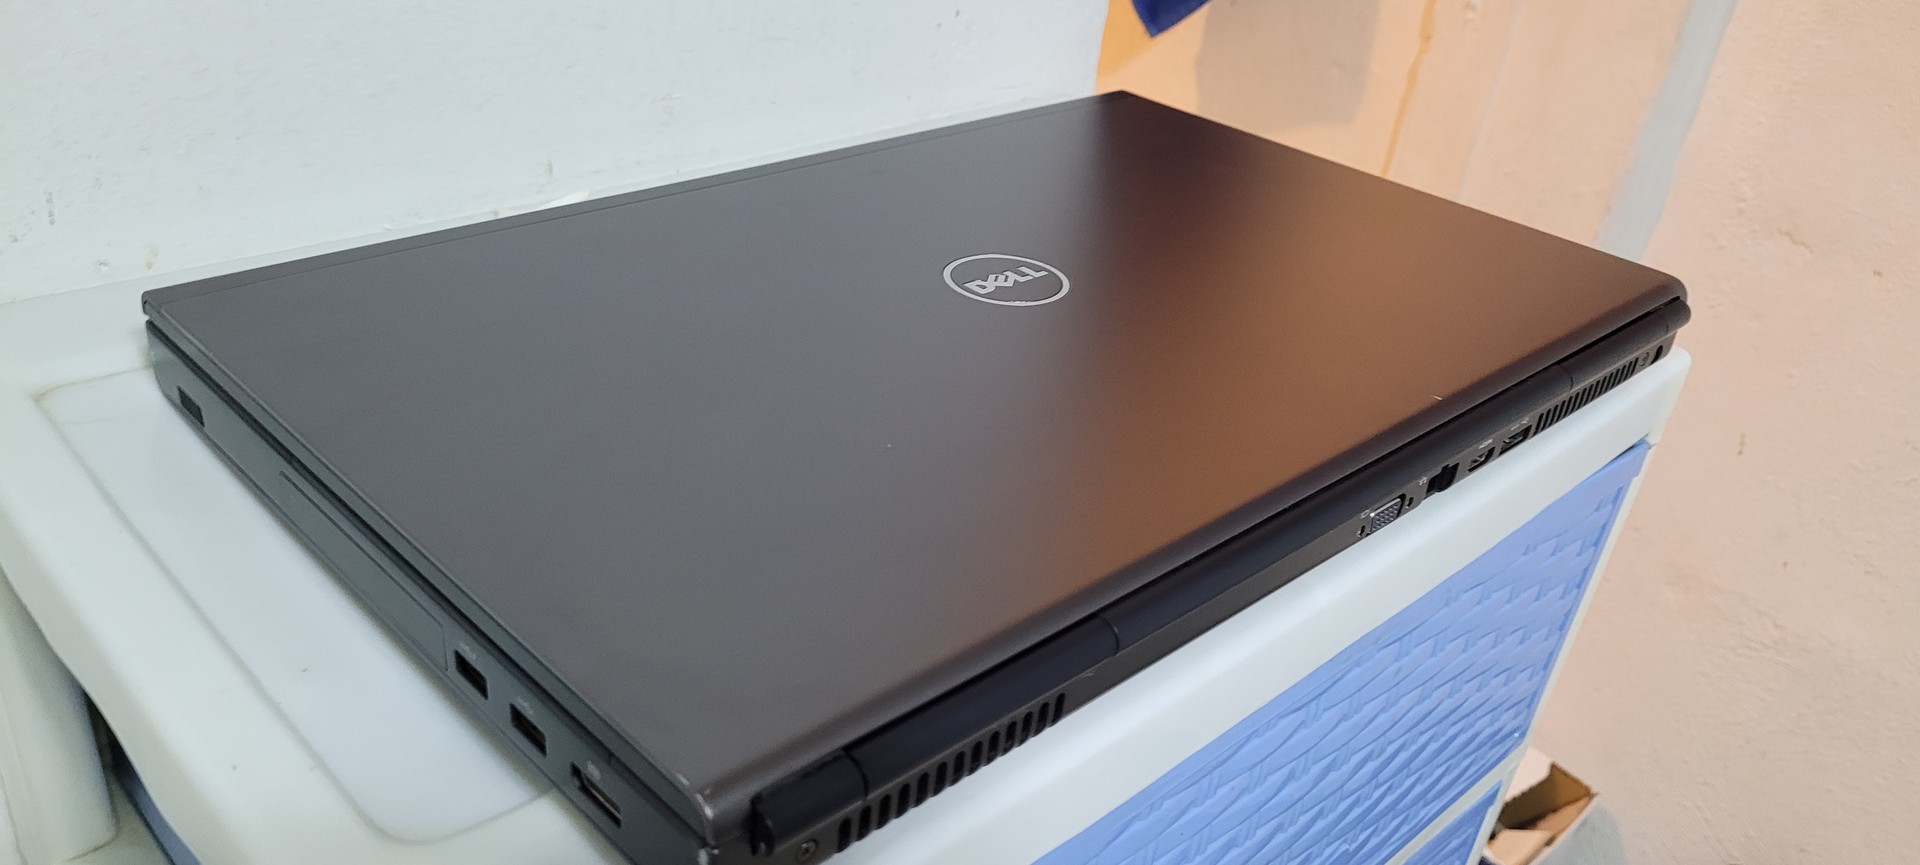 computadoras y laptops - Dell 4800 17 Pulg Core i7 Ram 16gb Discp 1000gb ssd solido hdmi 2